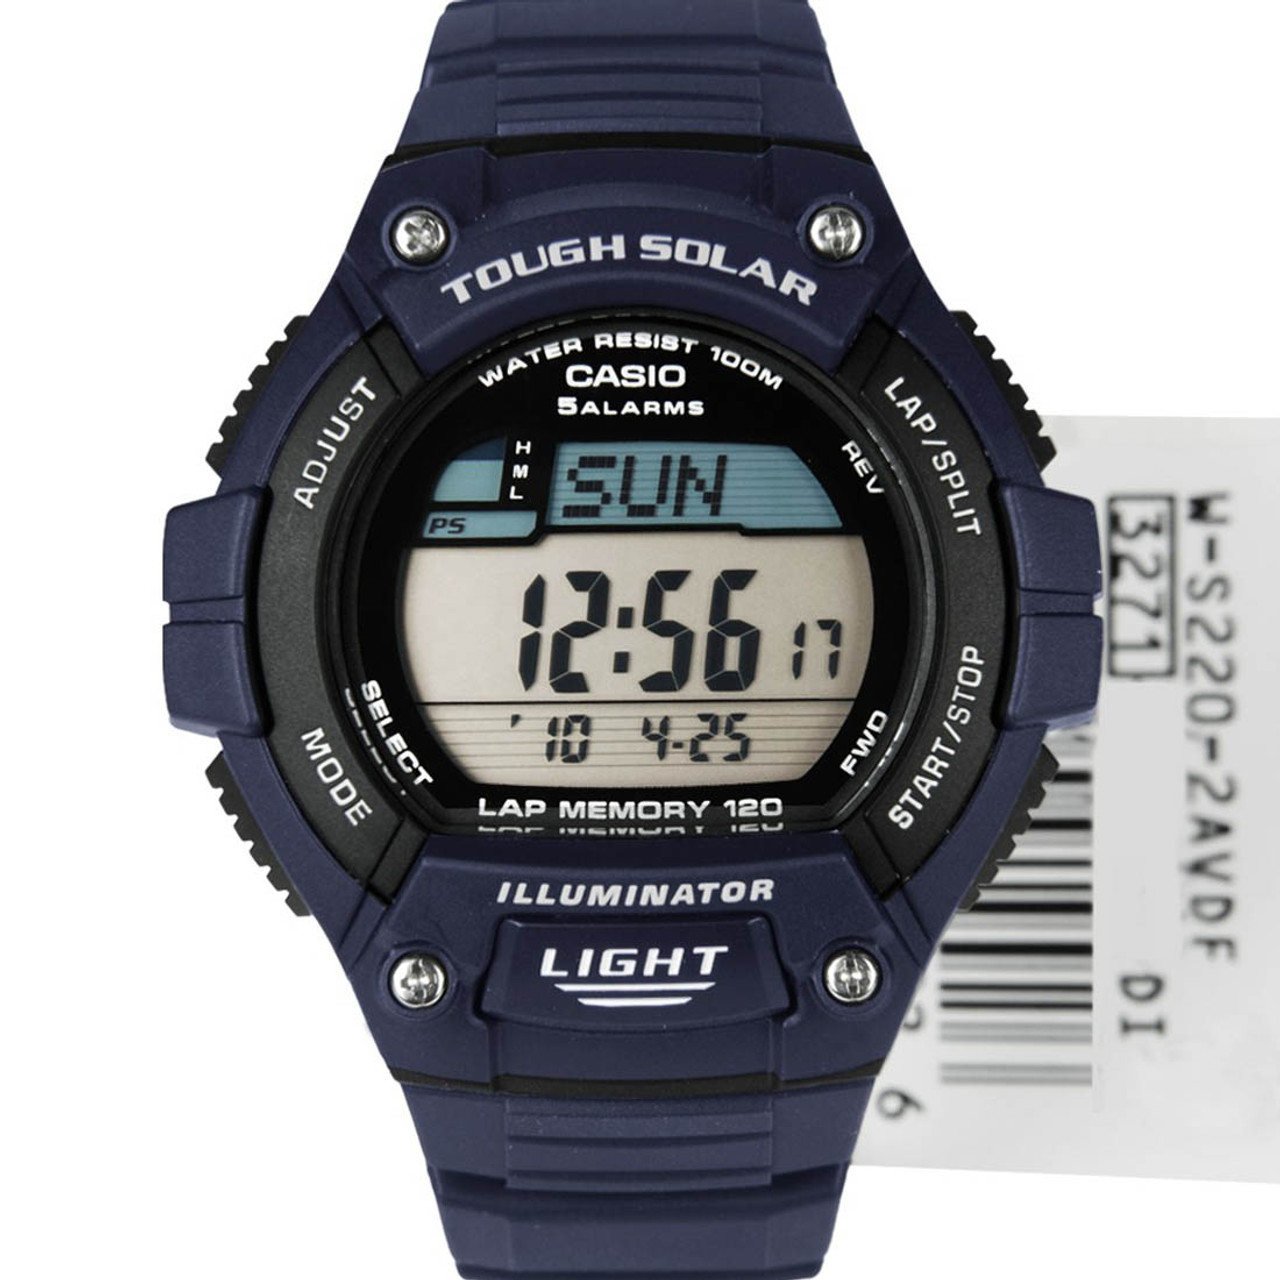 Khám phá đồng hồ Casio W-S220-2AVDF